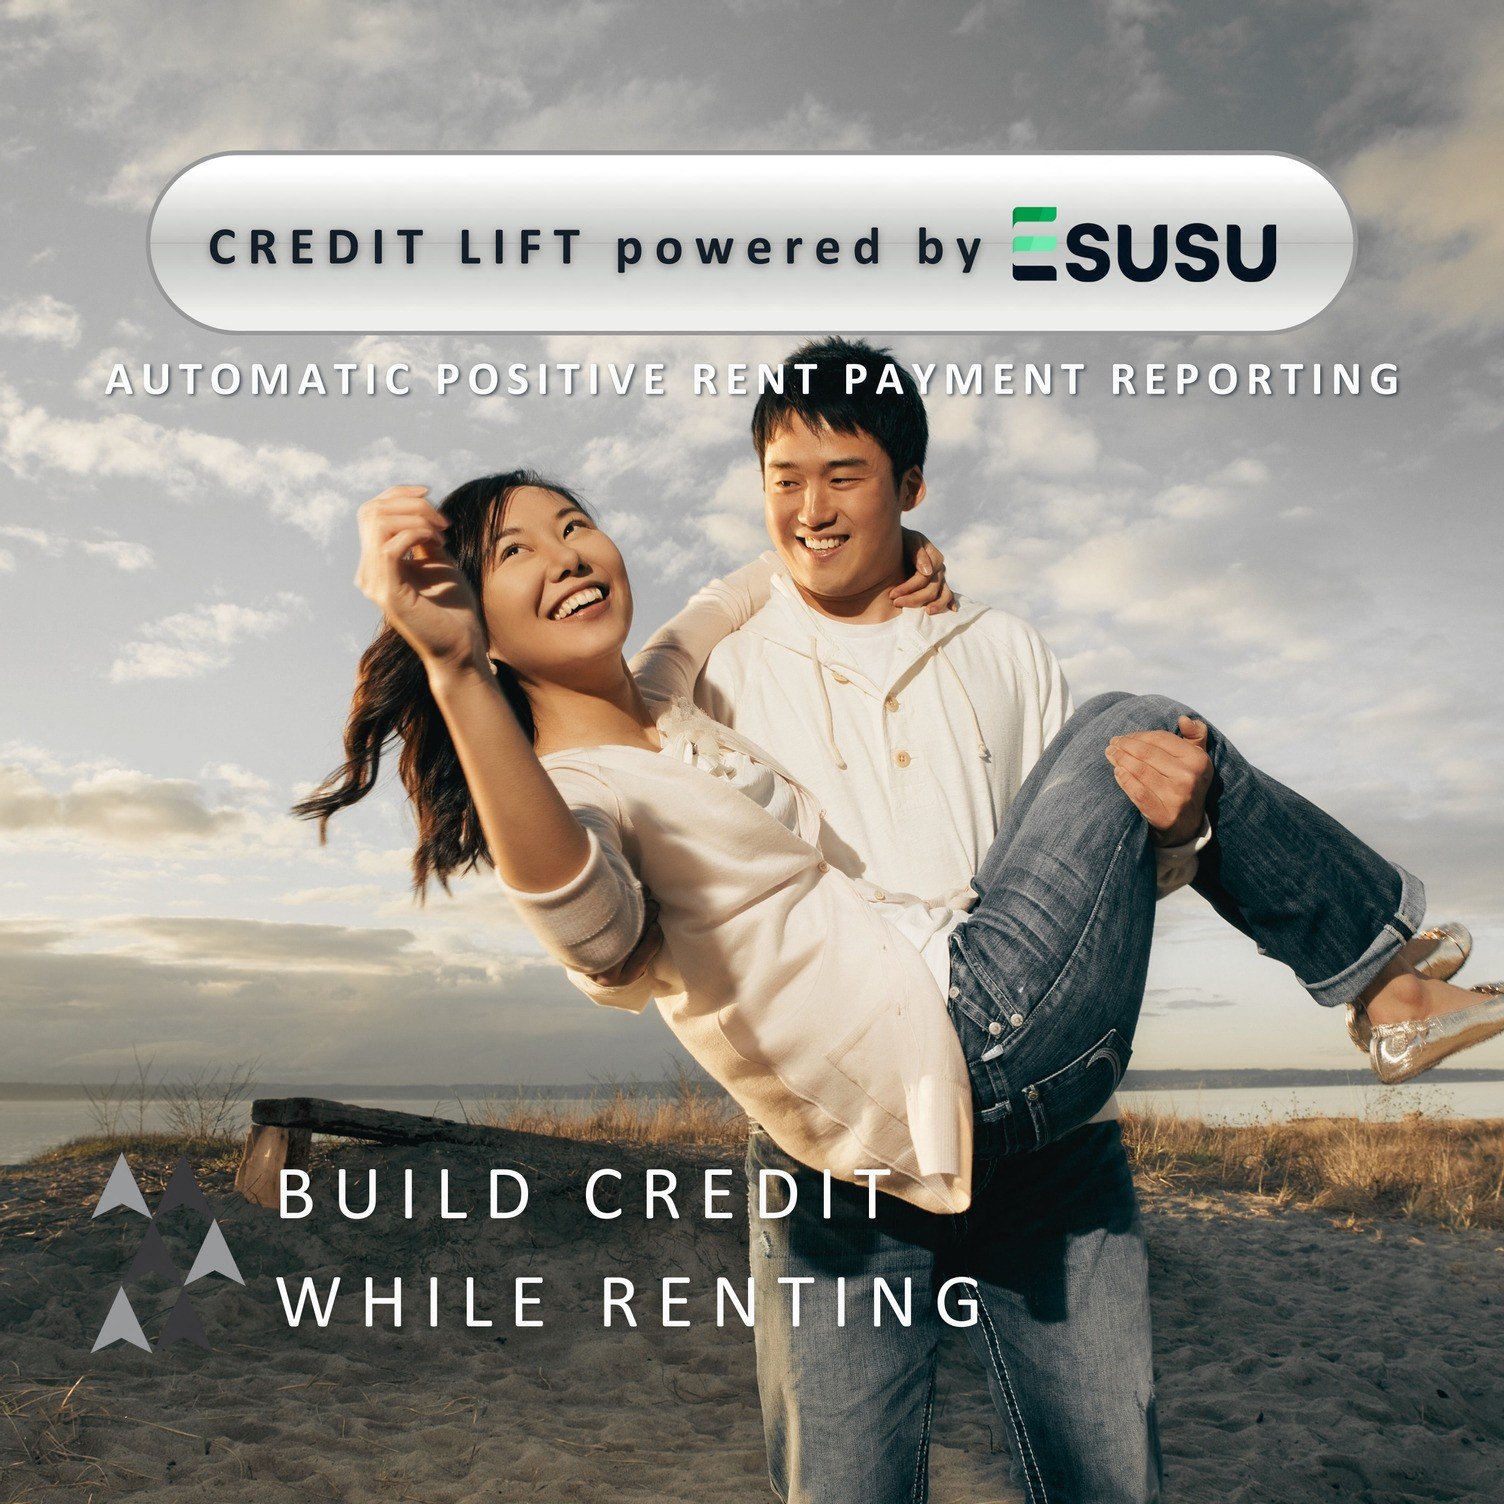 Credit Lift powered by Esusu